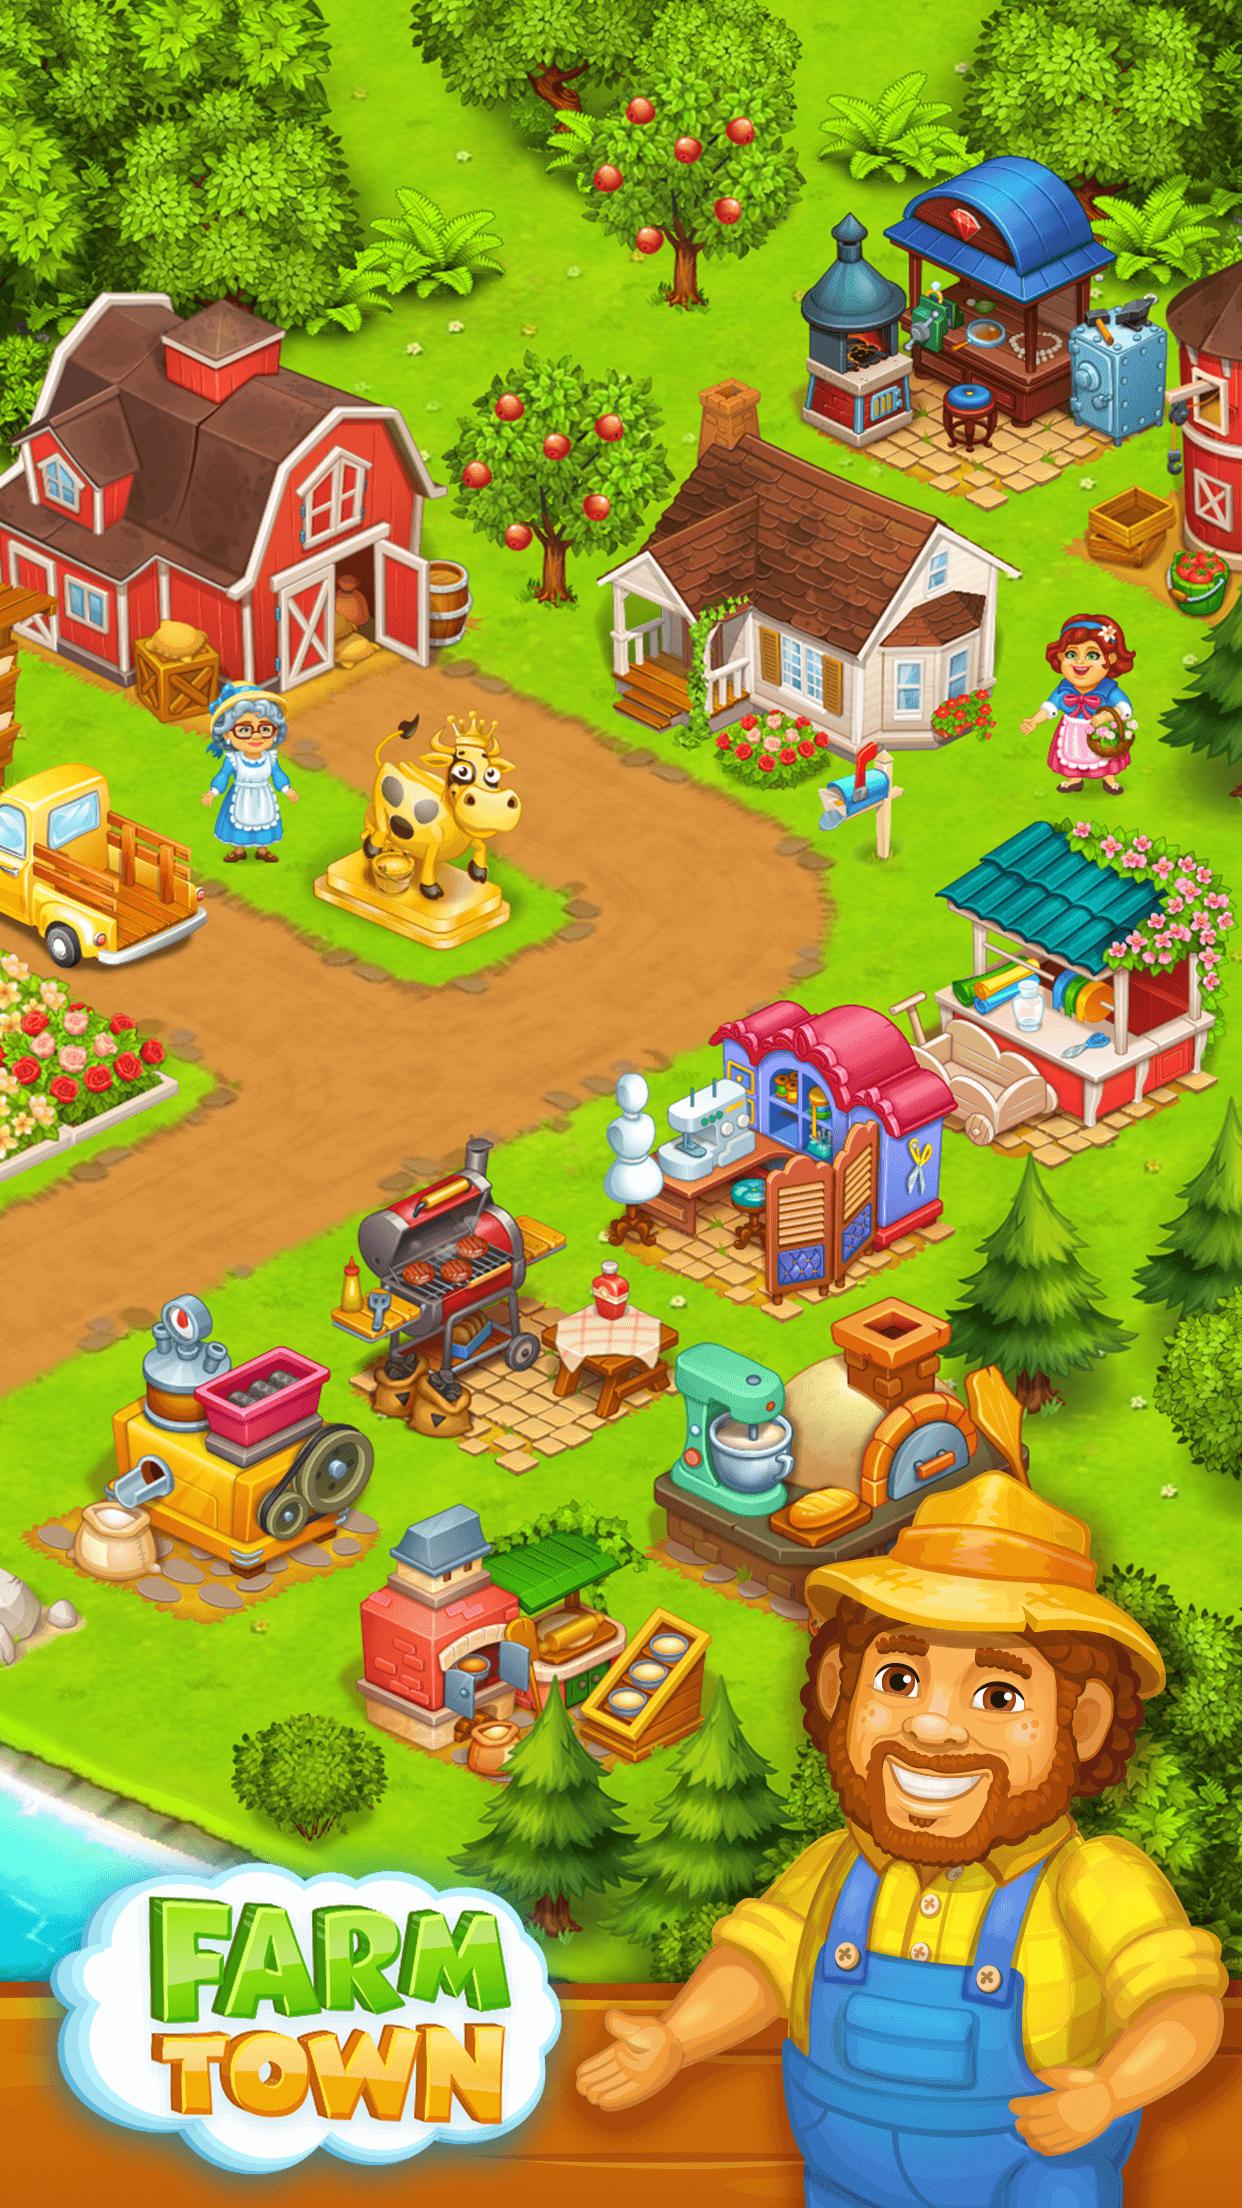 Farm Town Happy farming Day & food farm game City 3.41 Screenshot 18